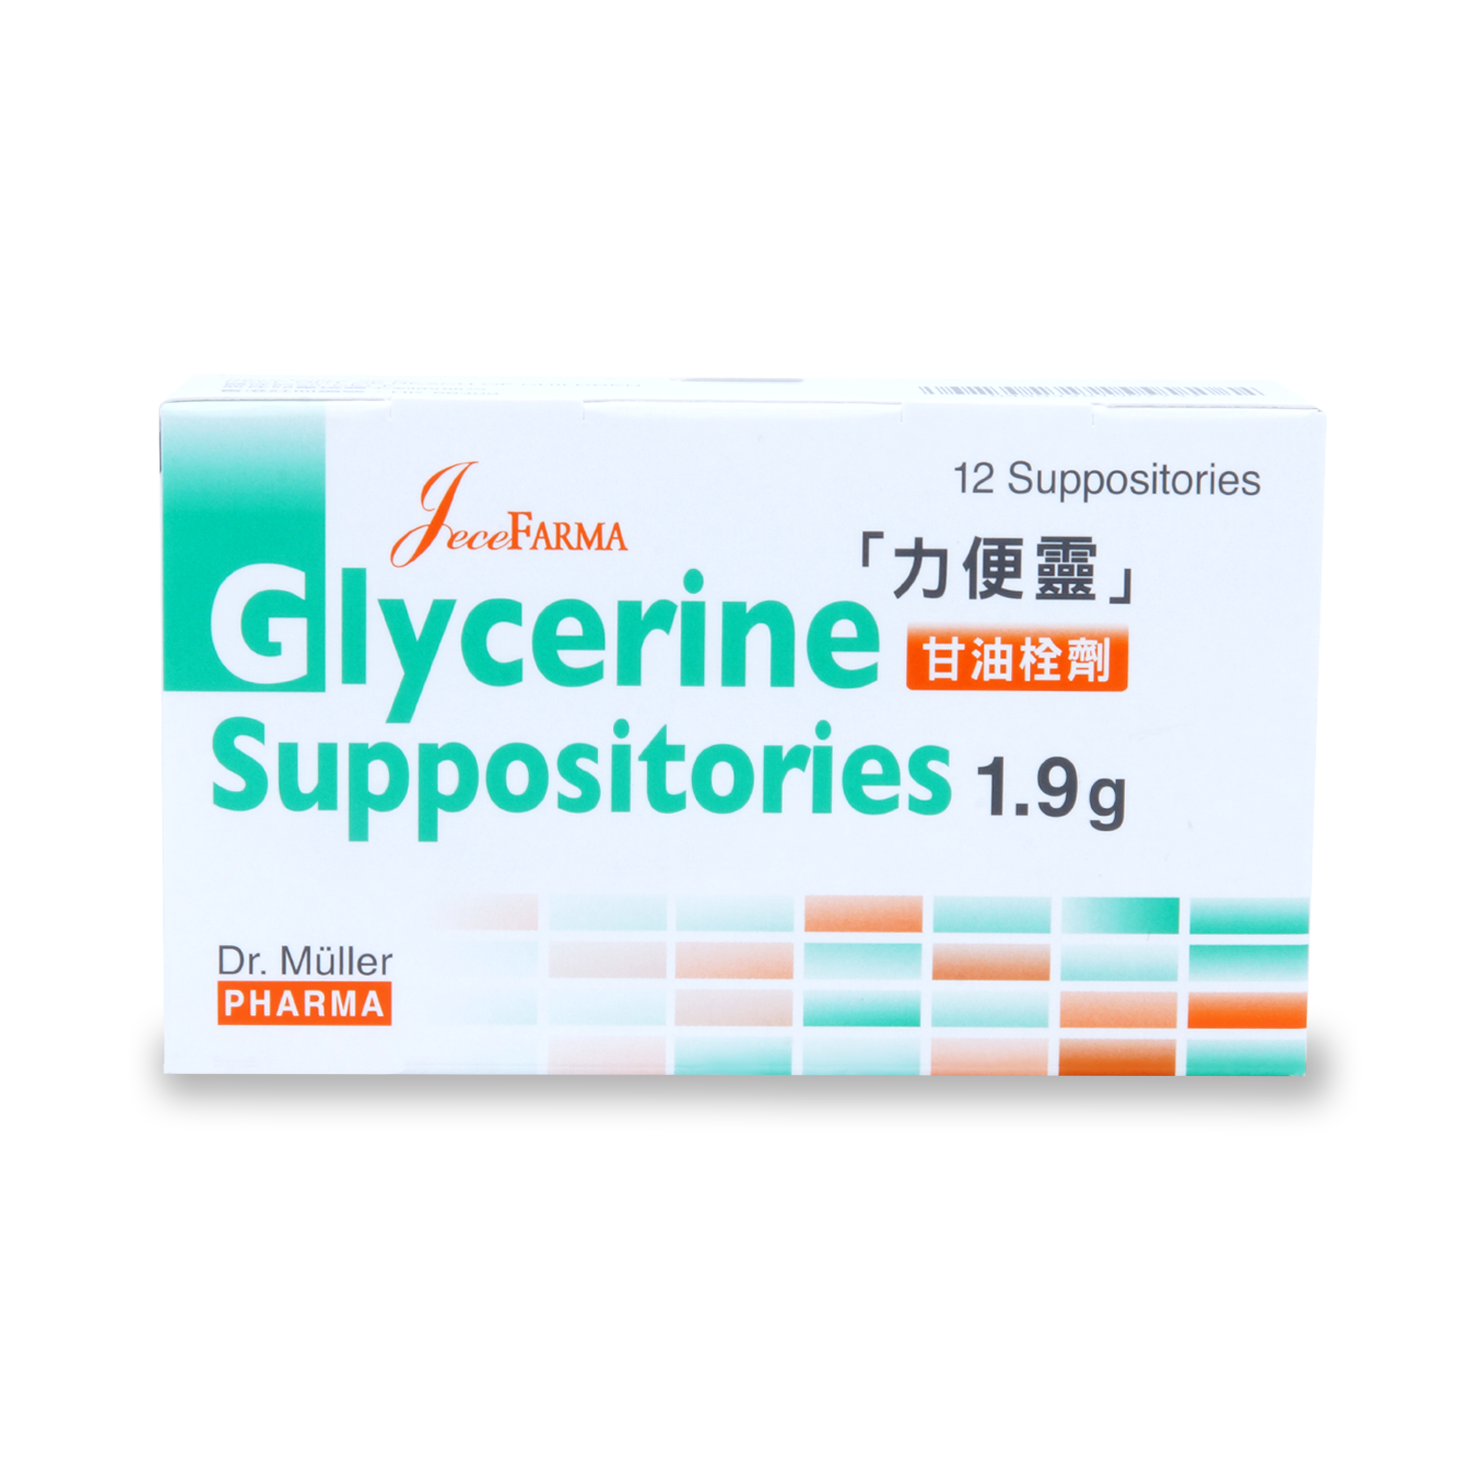 「力便靈」甘油栓劑 Jecefarma Glycerine Suppositories 1.9g 2x6's